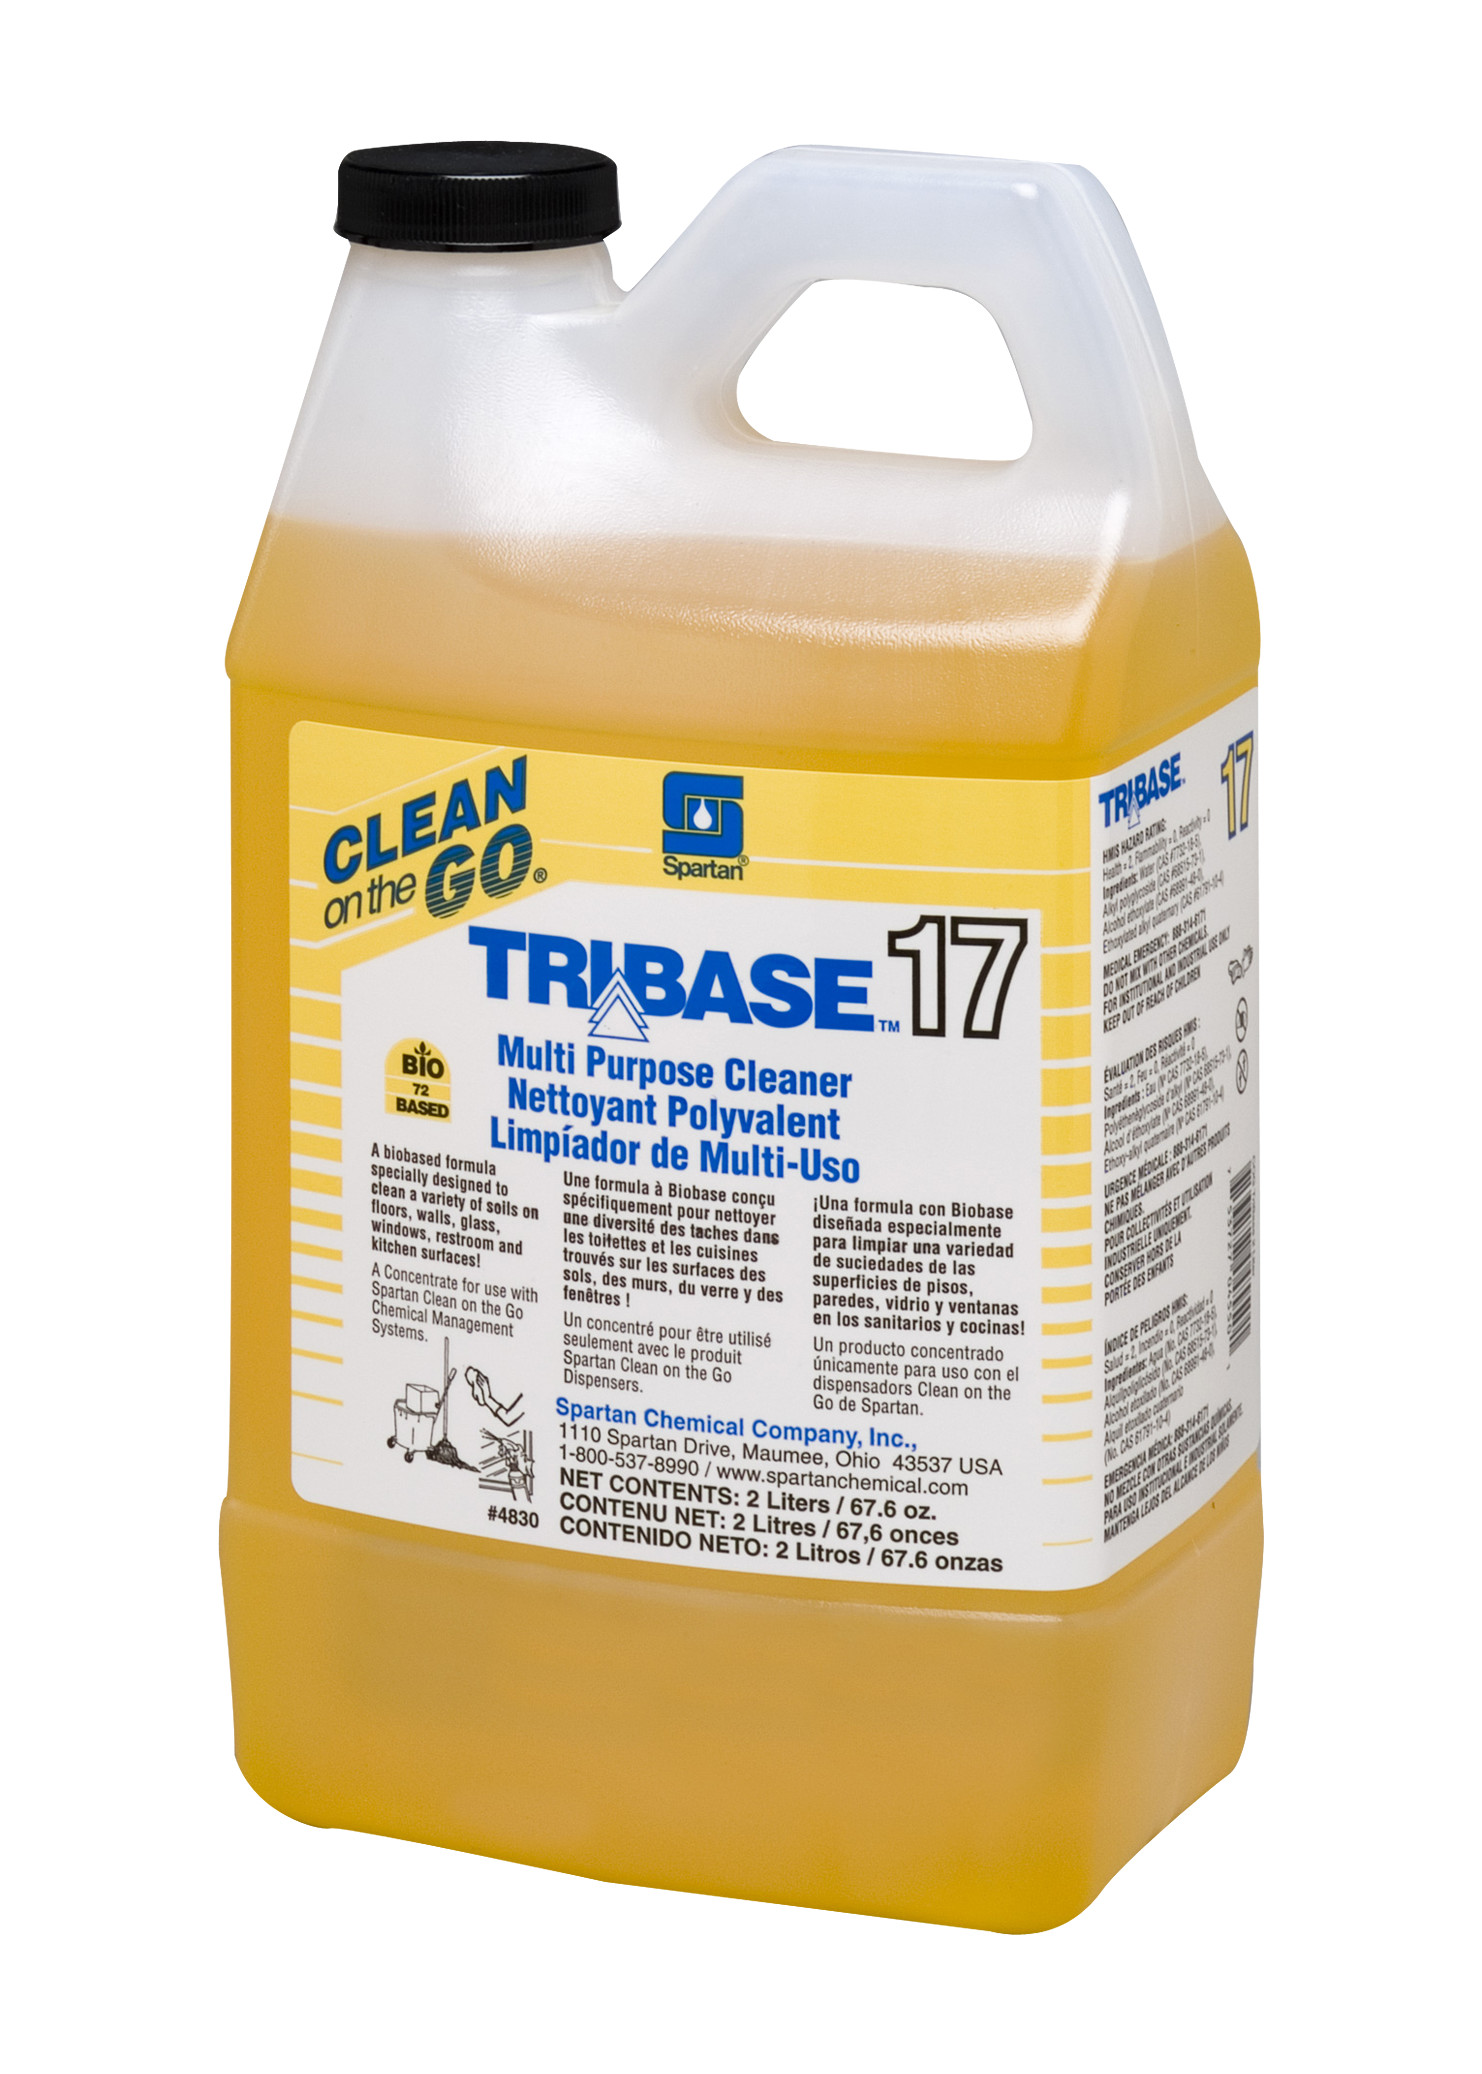 Spartan Chemical Company TriBase Multi Purpose Cleaner 17, 2 LITER 4/CS